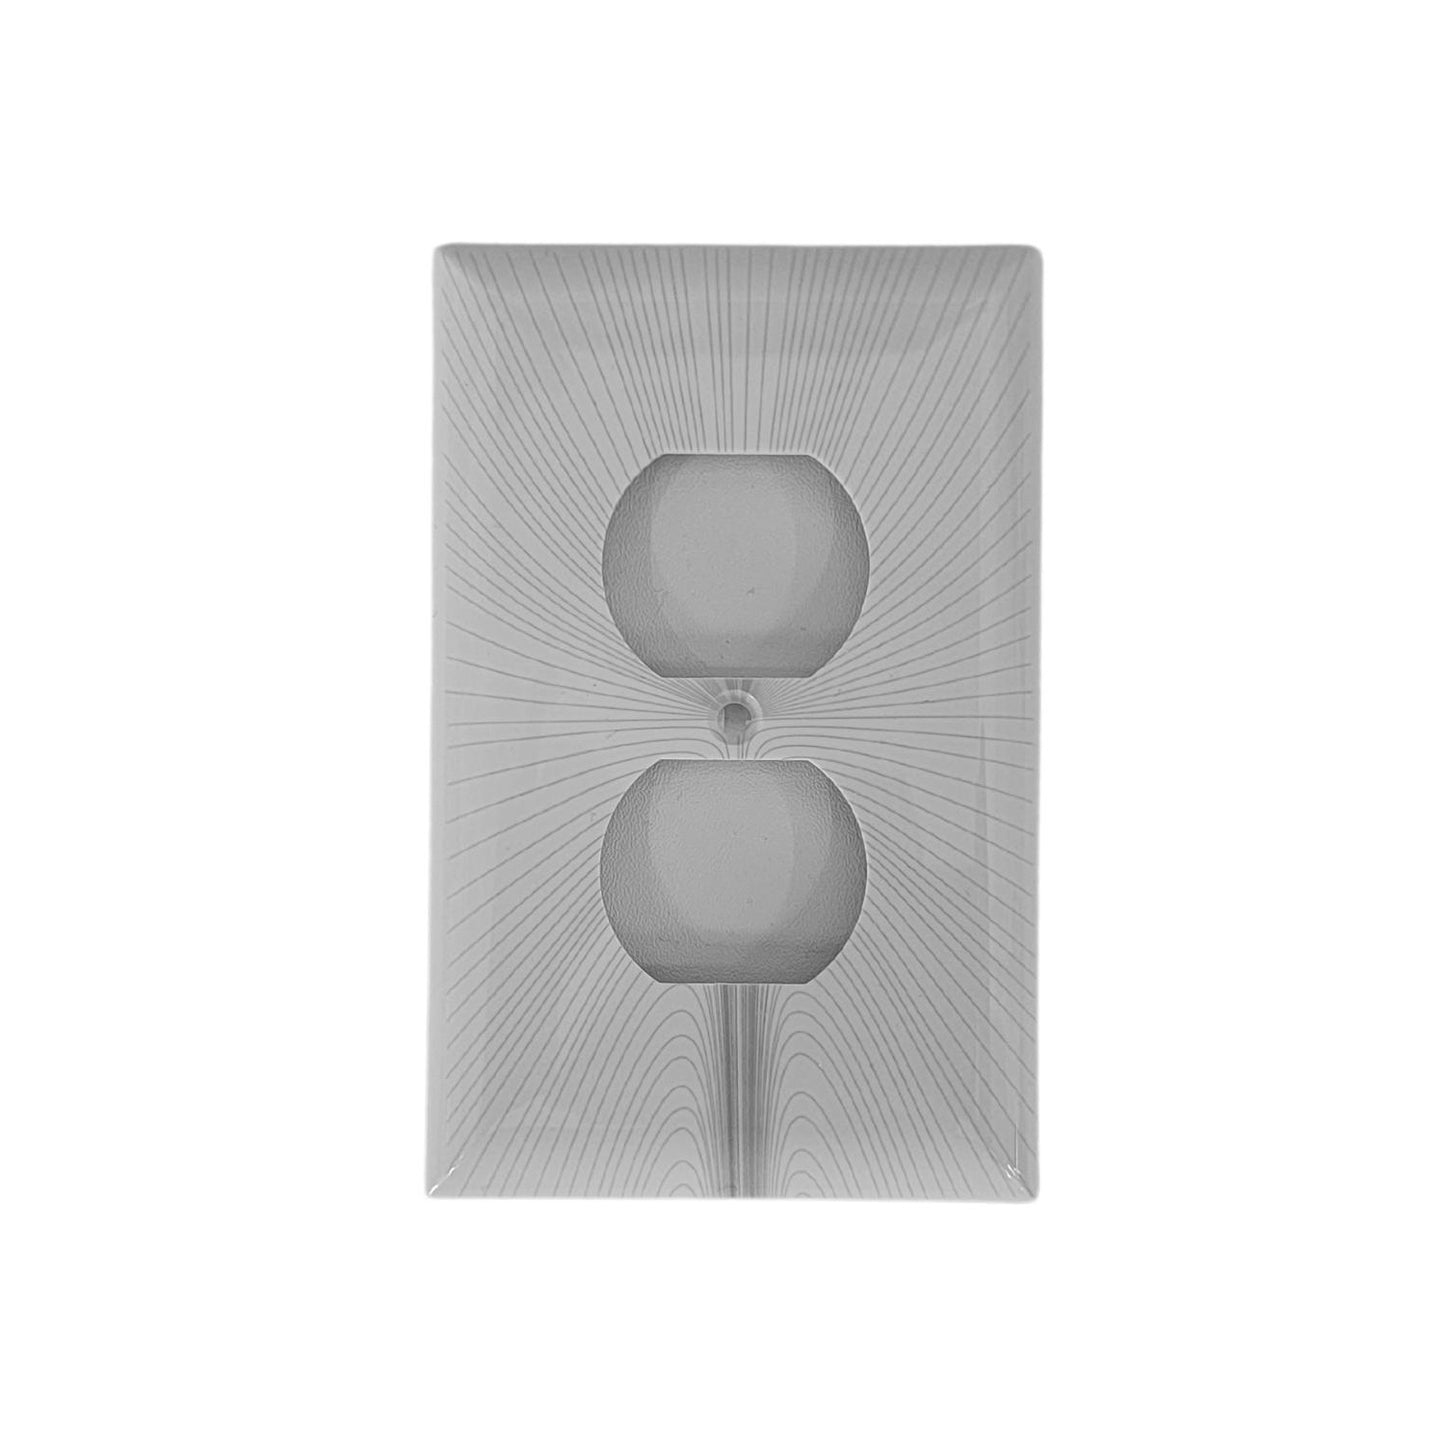 Geometric Design Single Duplex Outlet Cover Wall Plate White LA144-PWP12